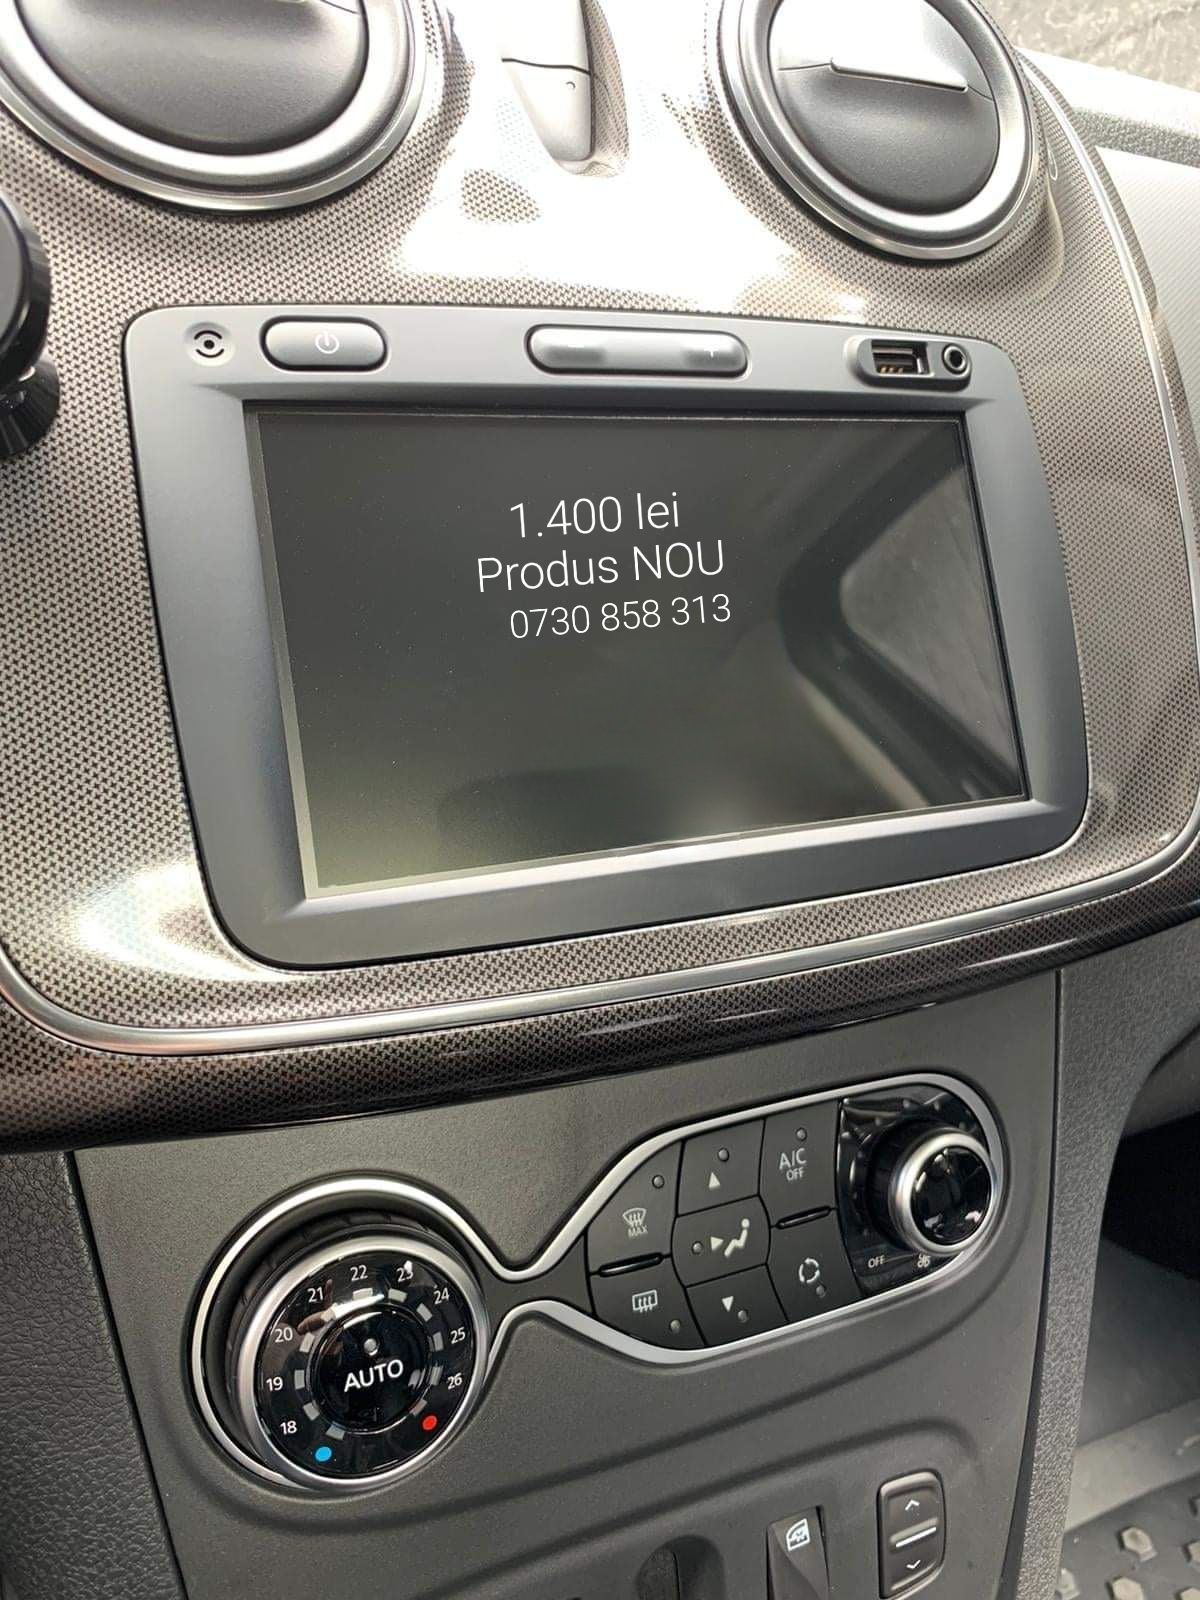 Apple CarPlay navigație MediaNav Android Auto navigație NOUĂ